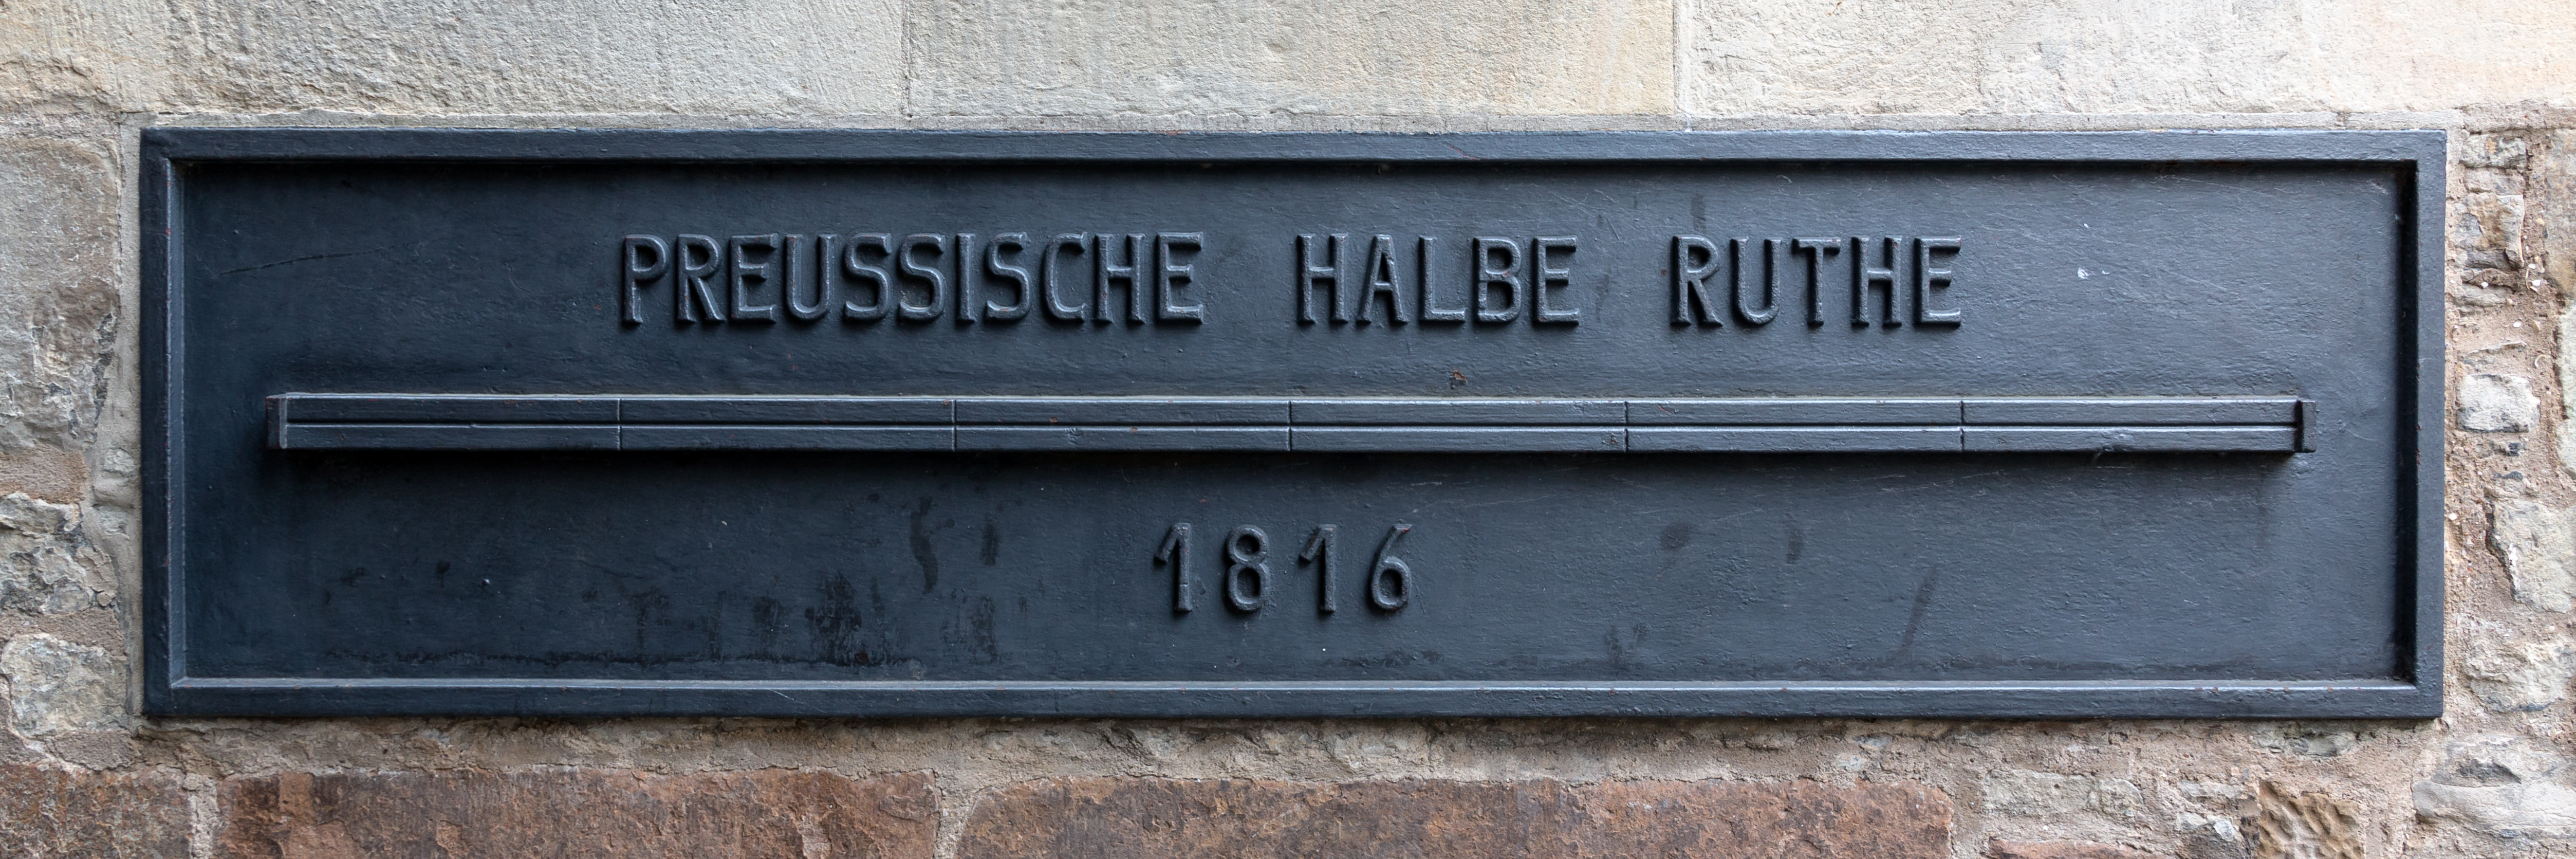 Dietmar Rabich / Wikimedia Commons / â€žMÃ¼nster, Historisches Rathaus, Preussische halbe Ruthe -- 2017 -- 9783 (crop)â€œ / CC BY-SA 4.0